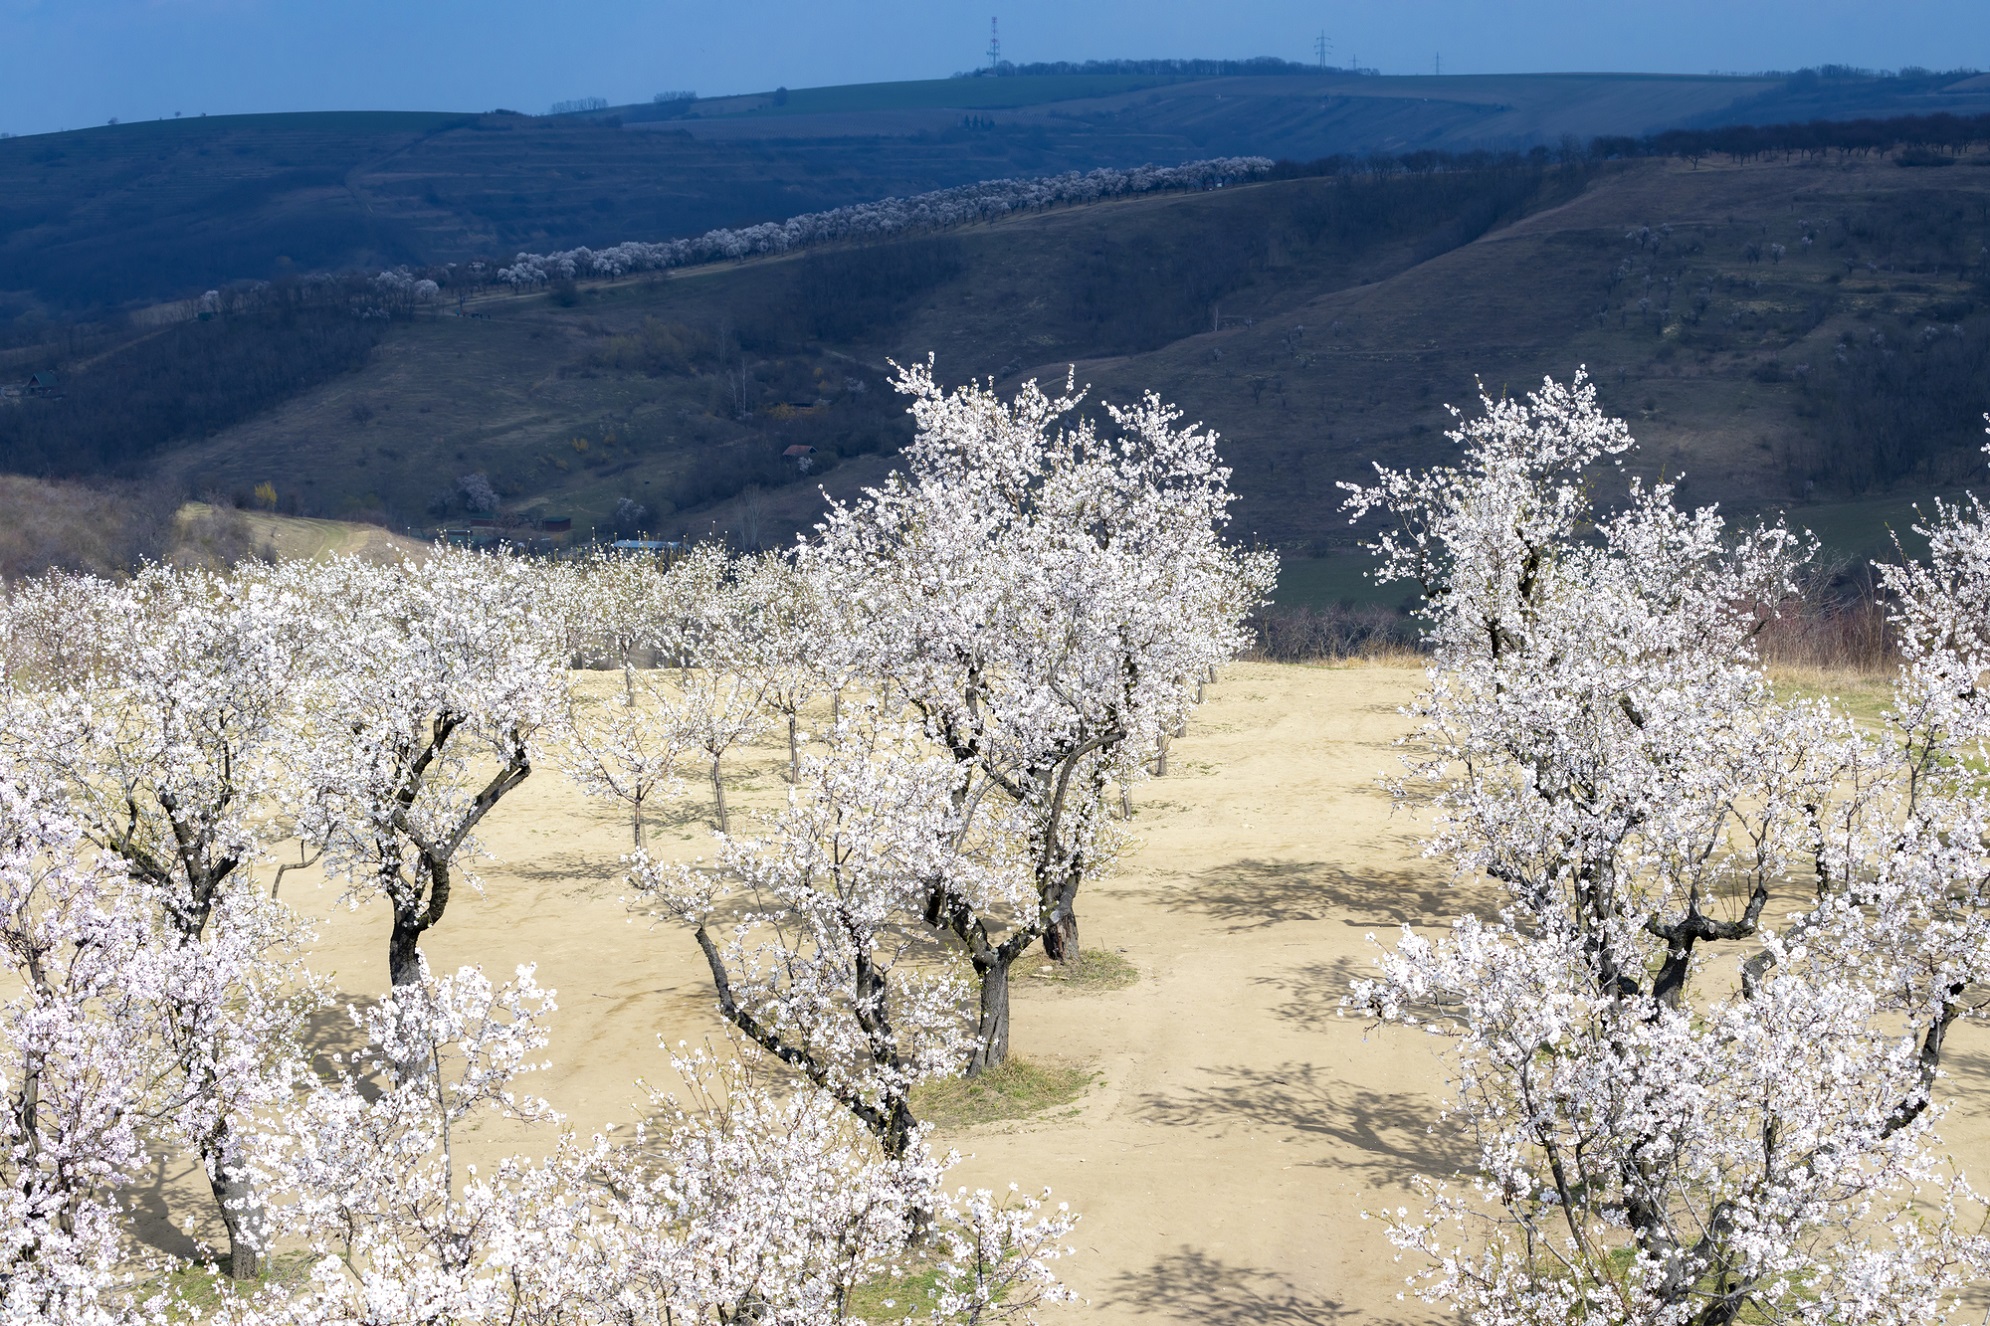 Almond tree orchard in Hustopece, South Moravia, Czech Republic